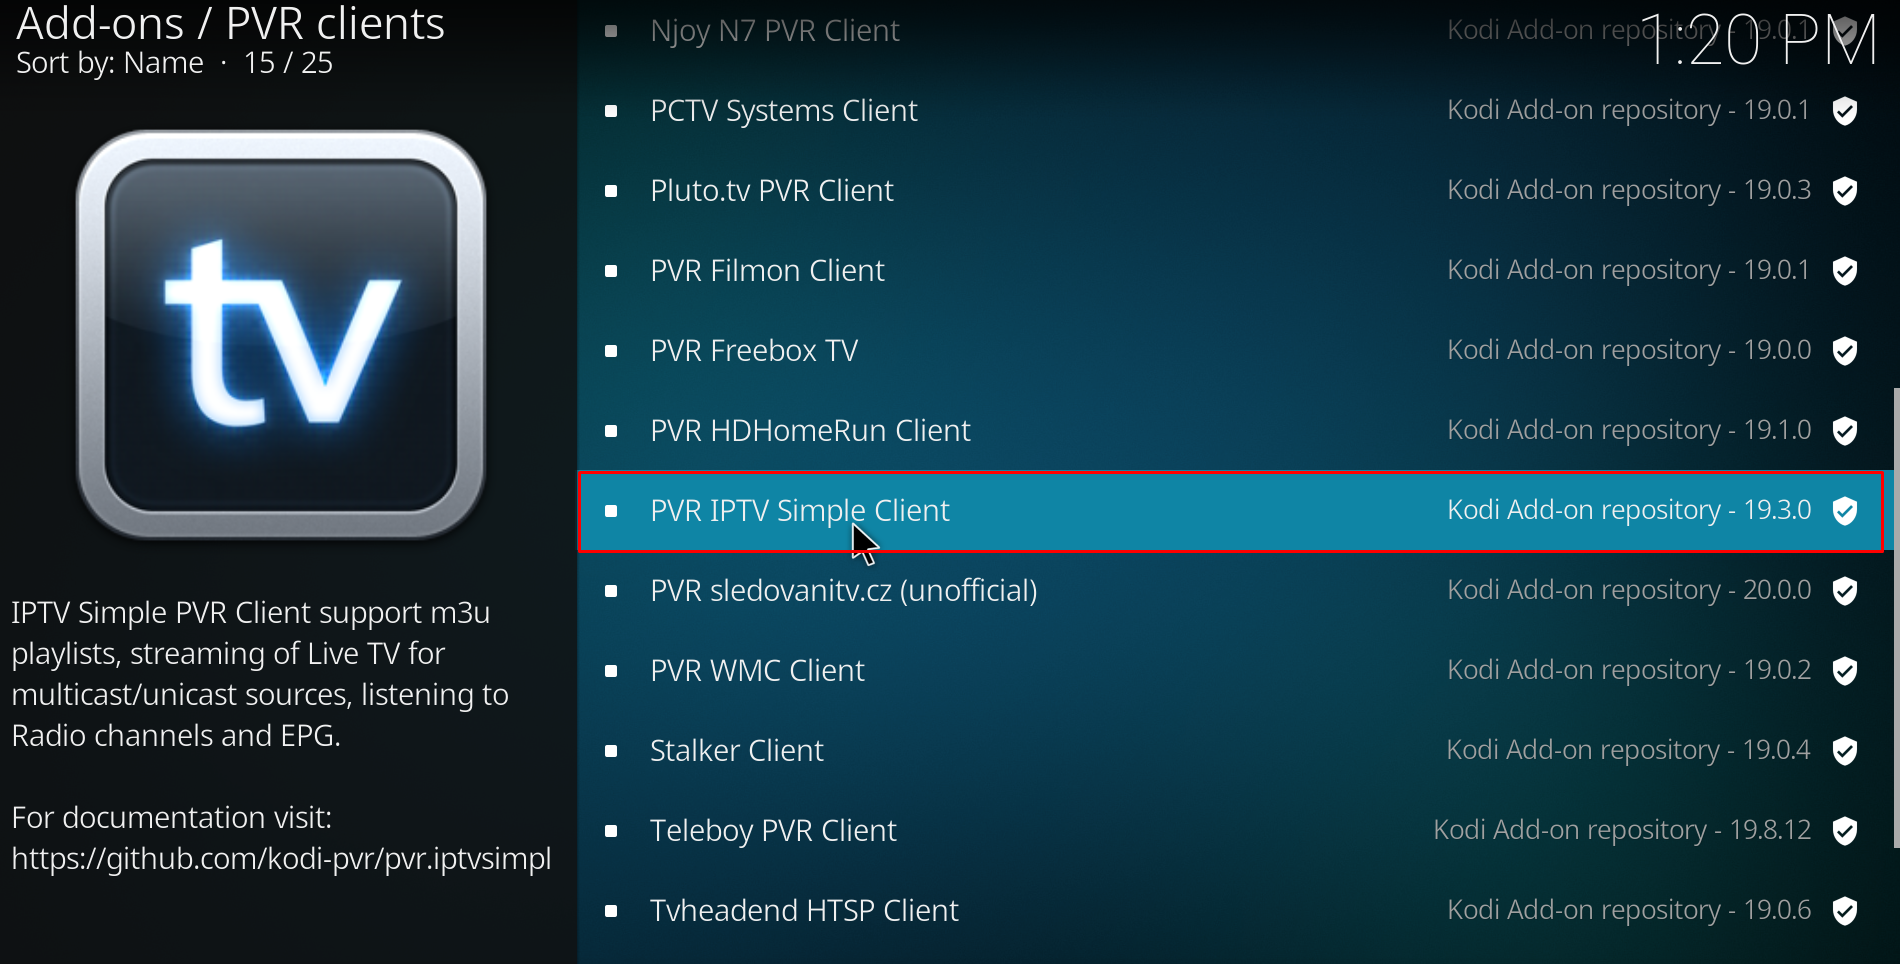 Select PVR IPTV Simple Client to stream 247 IPTV